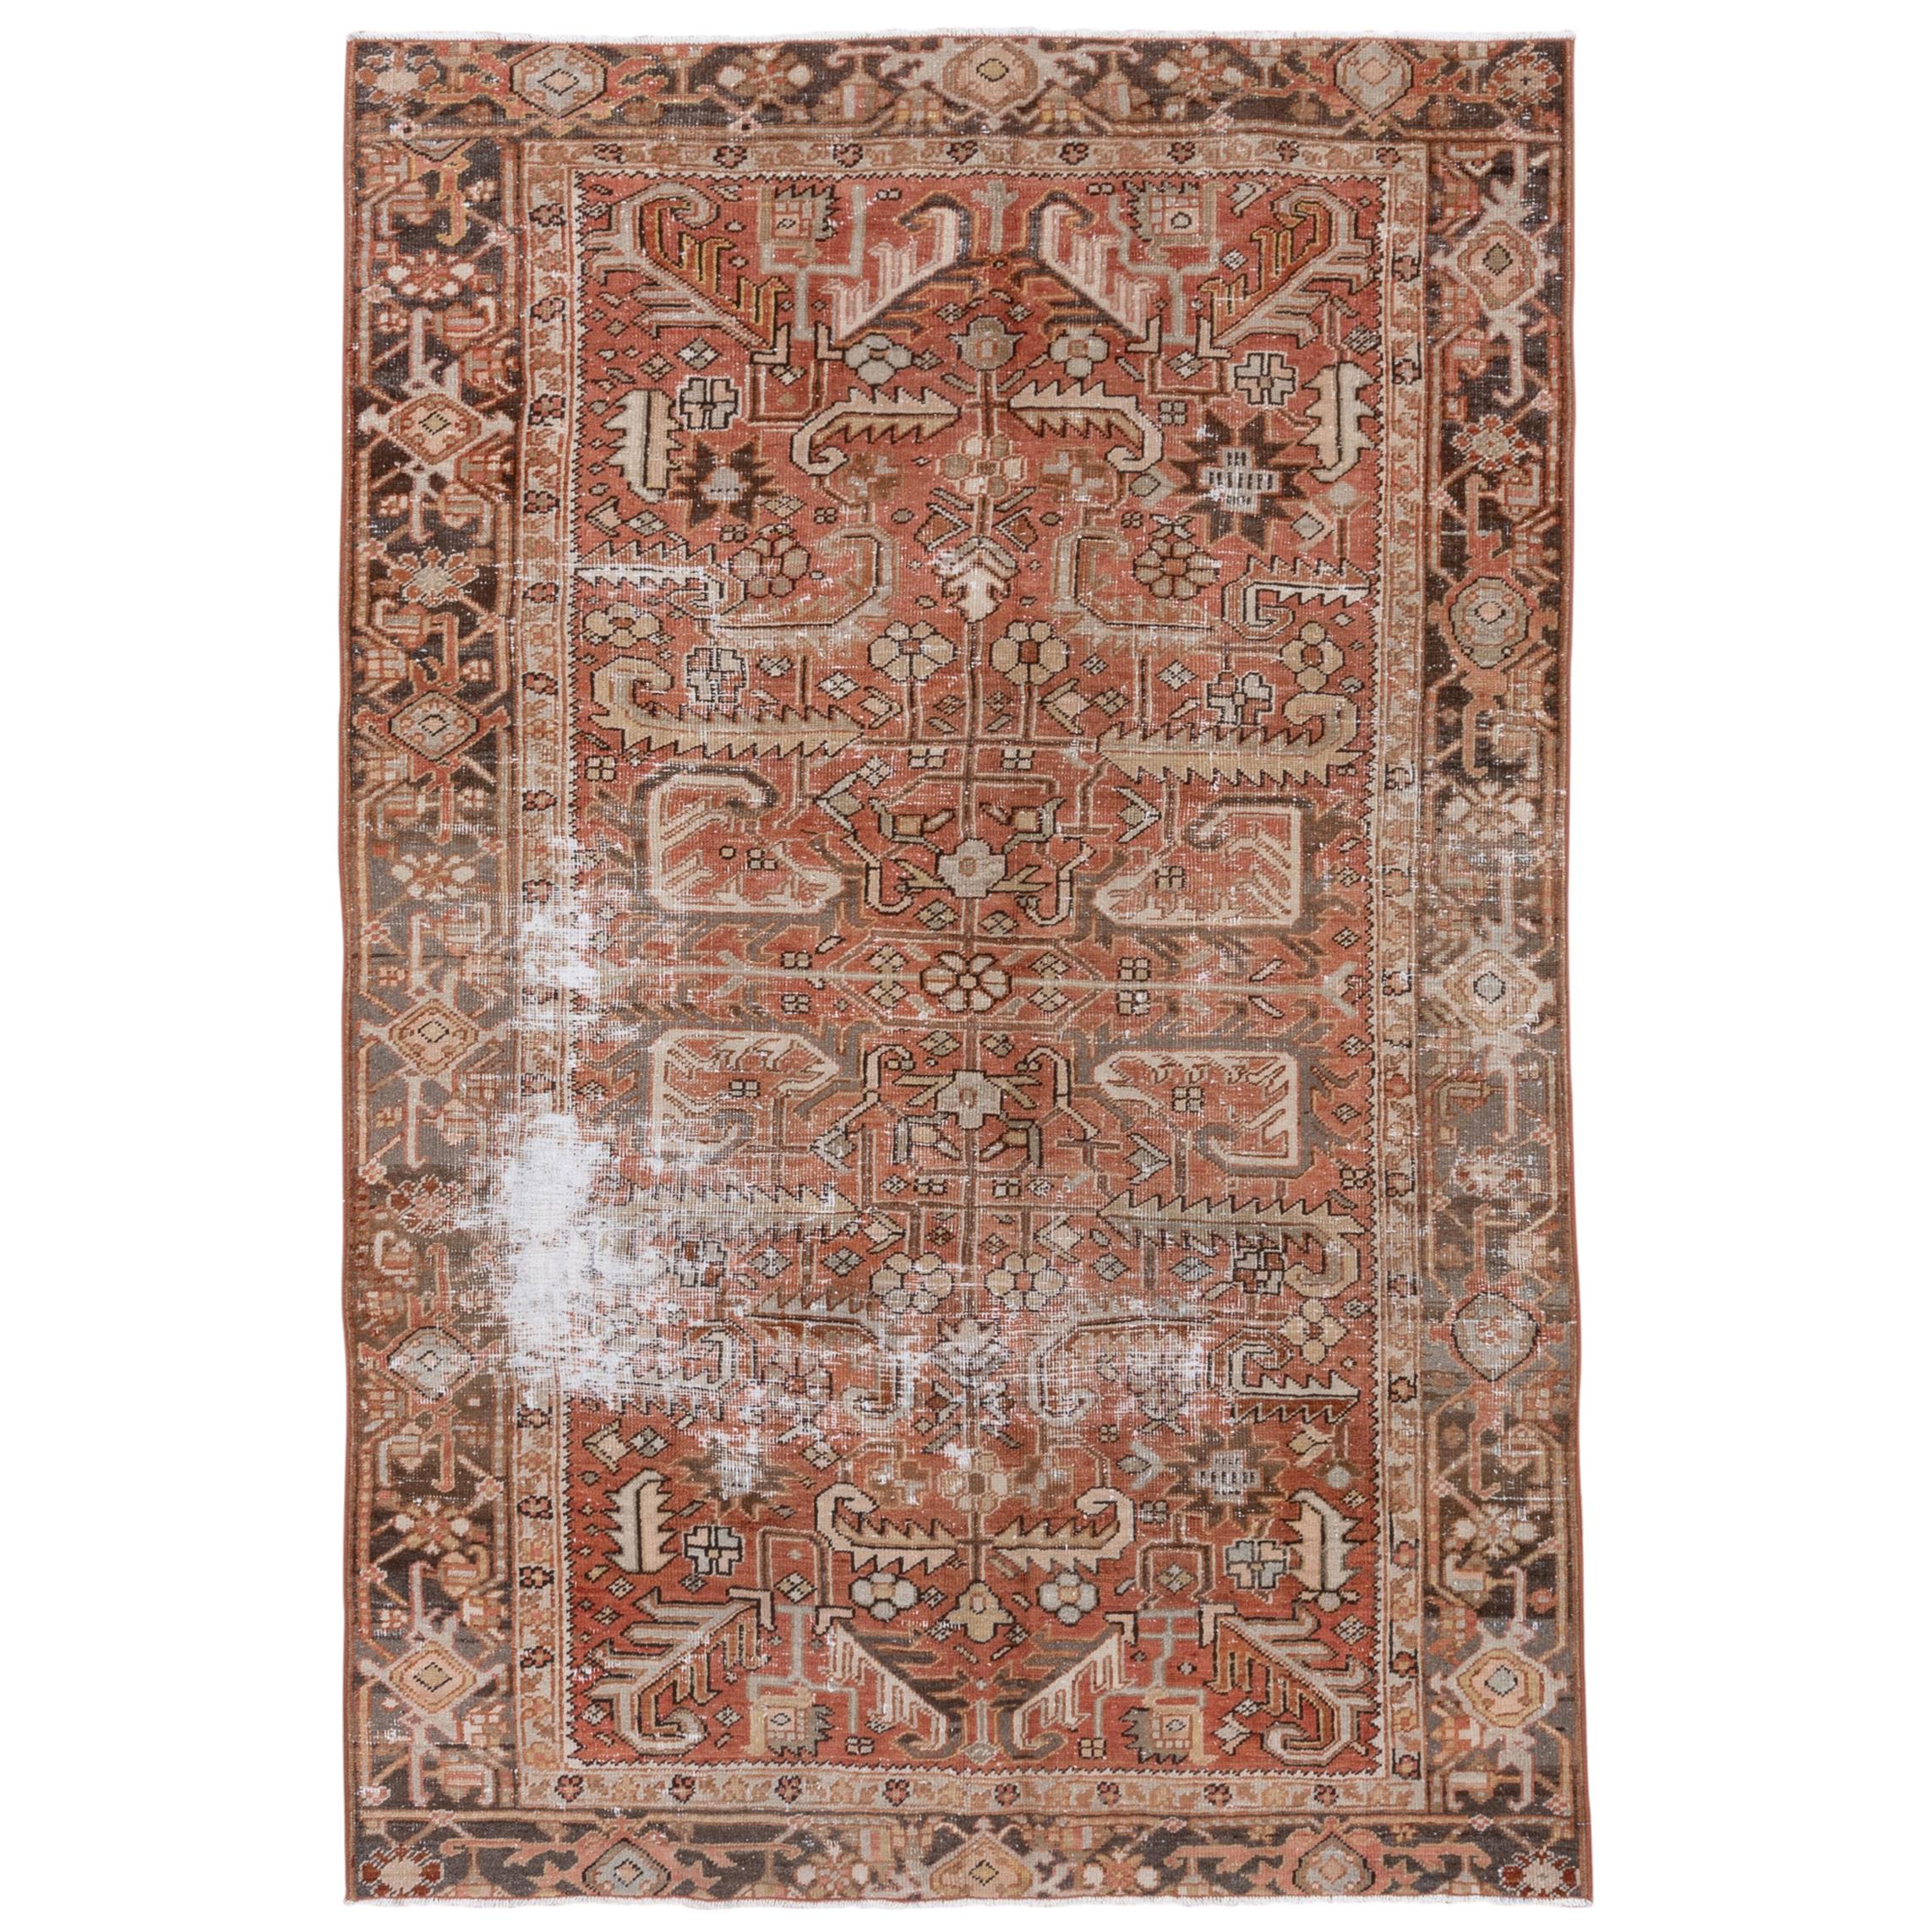 Distressed Antique Persian Heriz Carpet, Rust Field, Dark Gray Borders